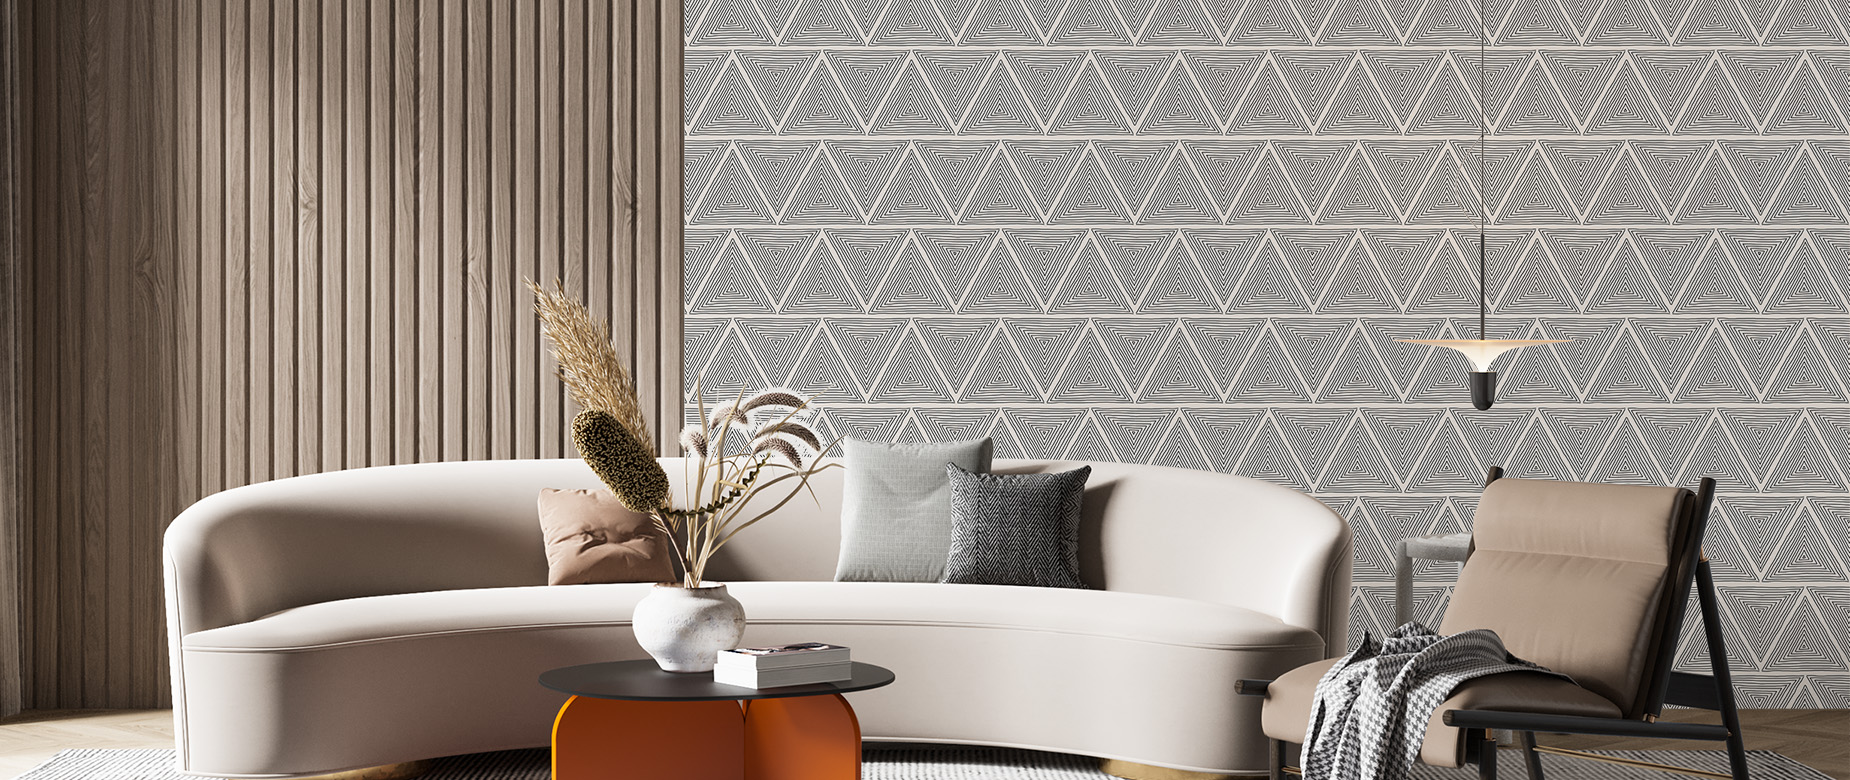 beige-triangles-design-Seamless design repeat pattern wallpaper-in-wide-room